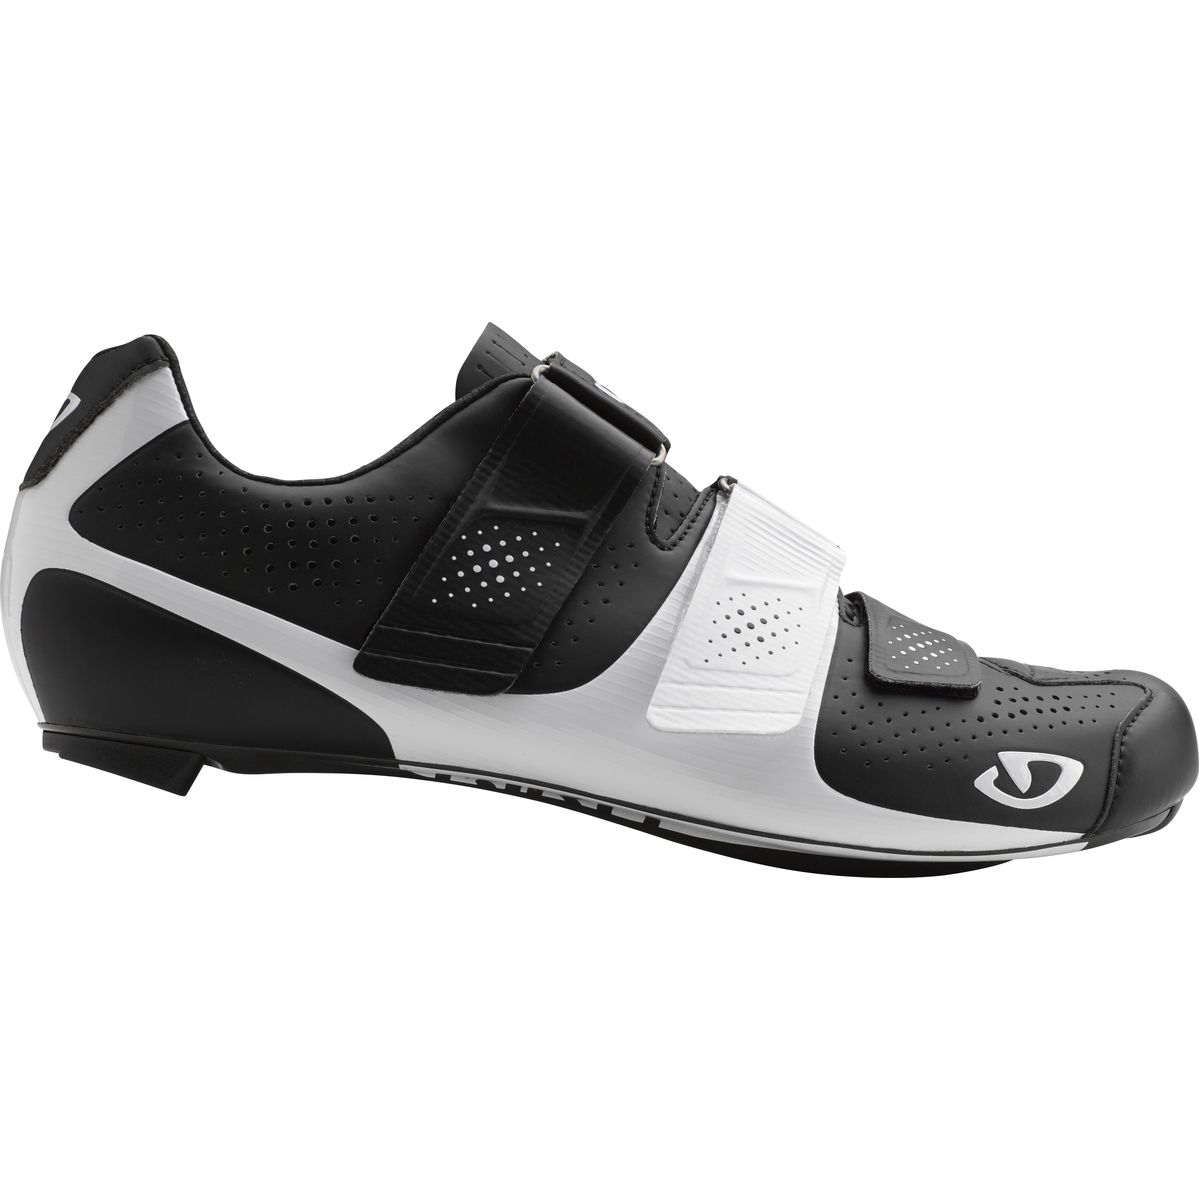 Giro Prolight SLX II Shoes Matte Black/Gloss White, 45.5